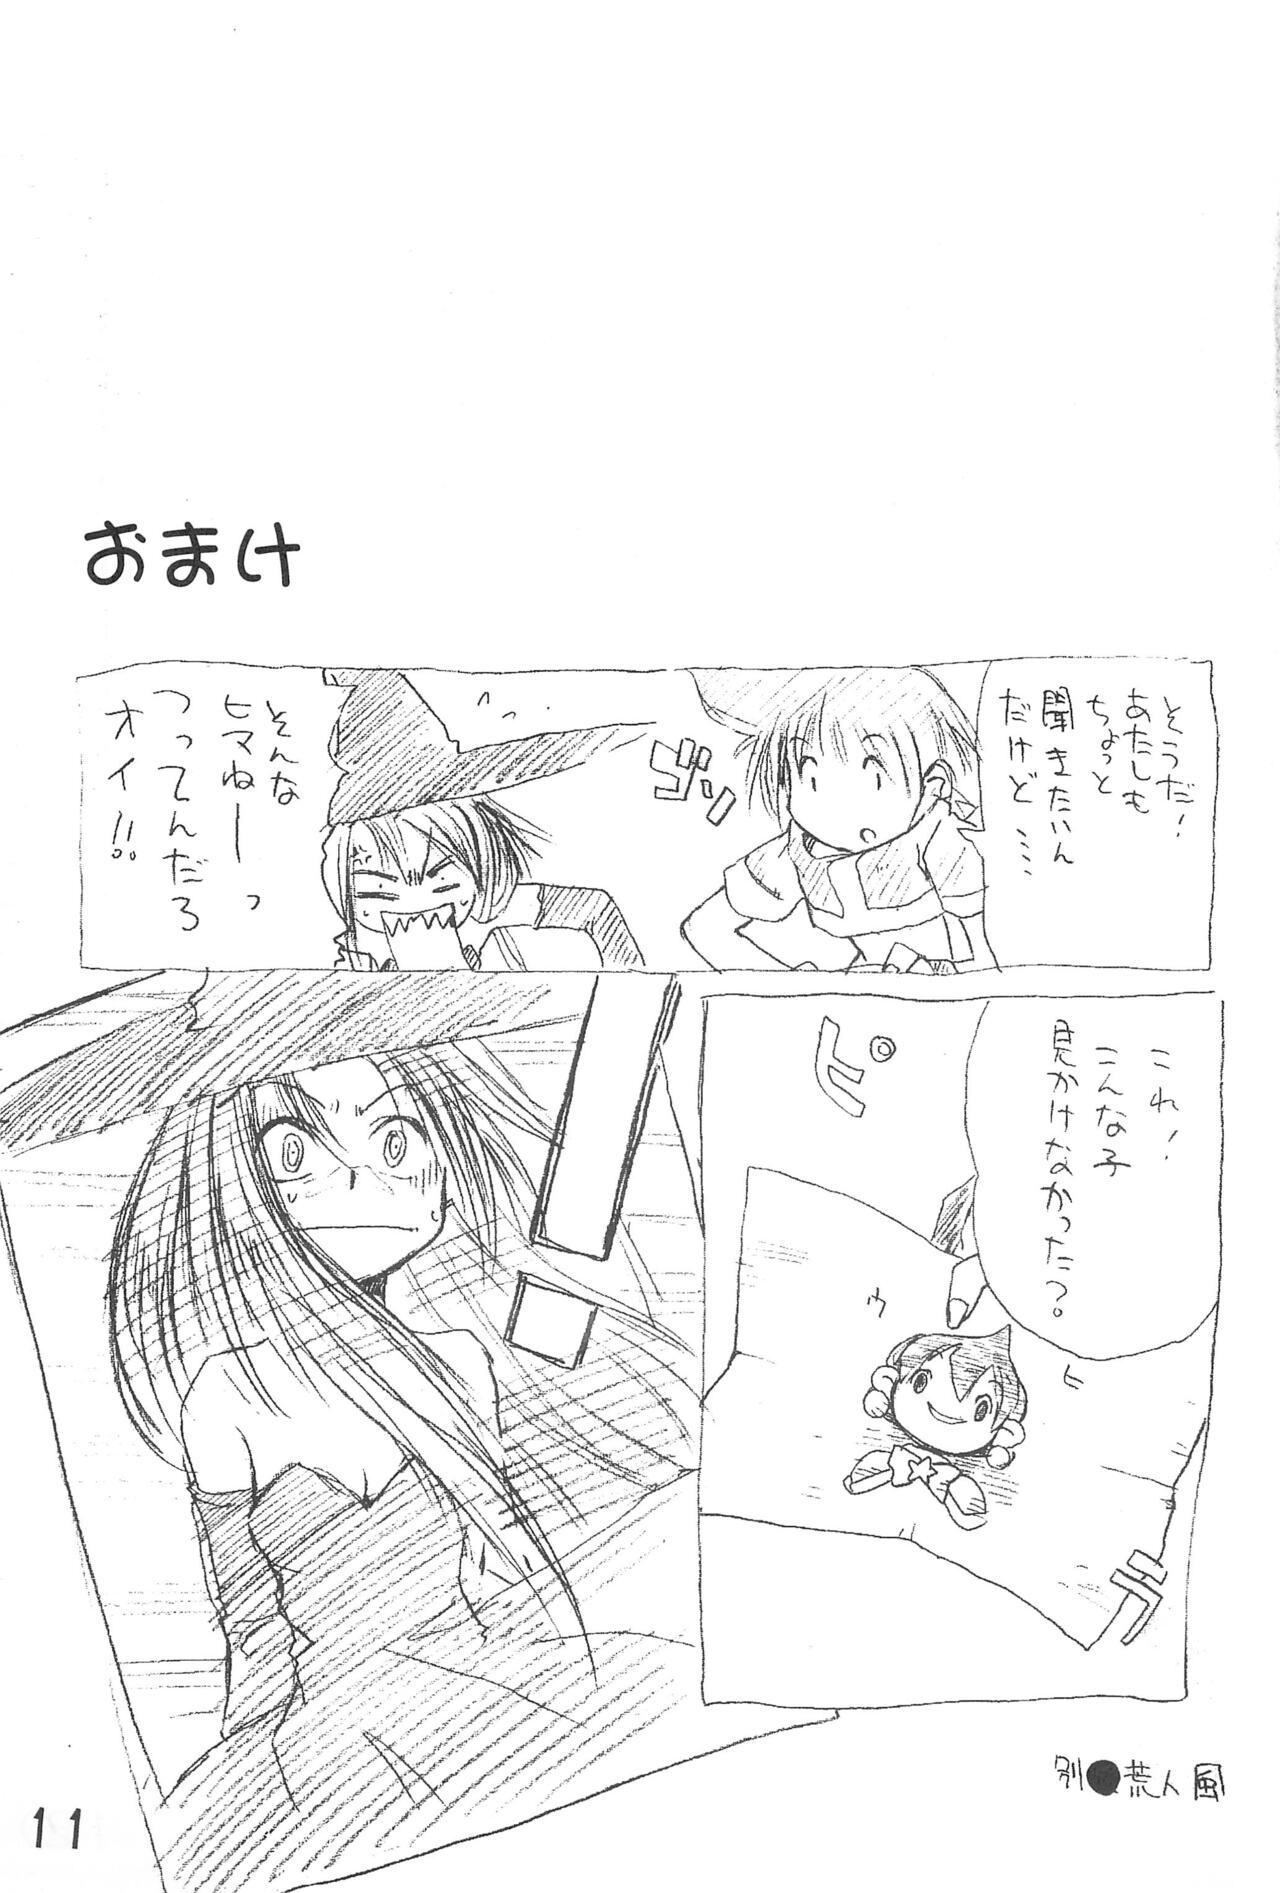 Bra BOKOSUKA Juicy - Page 11